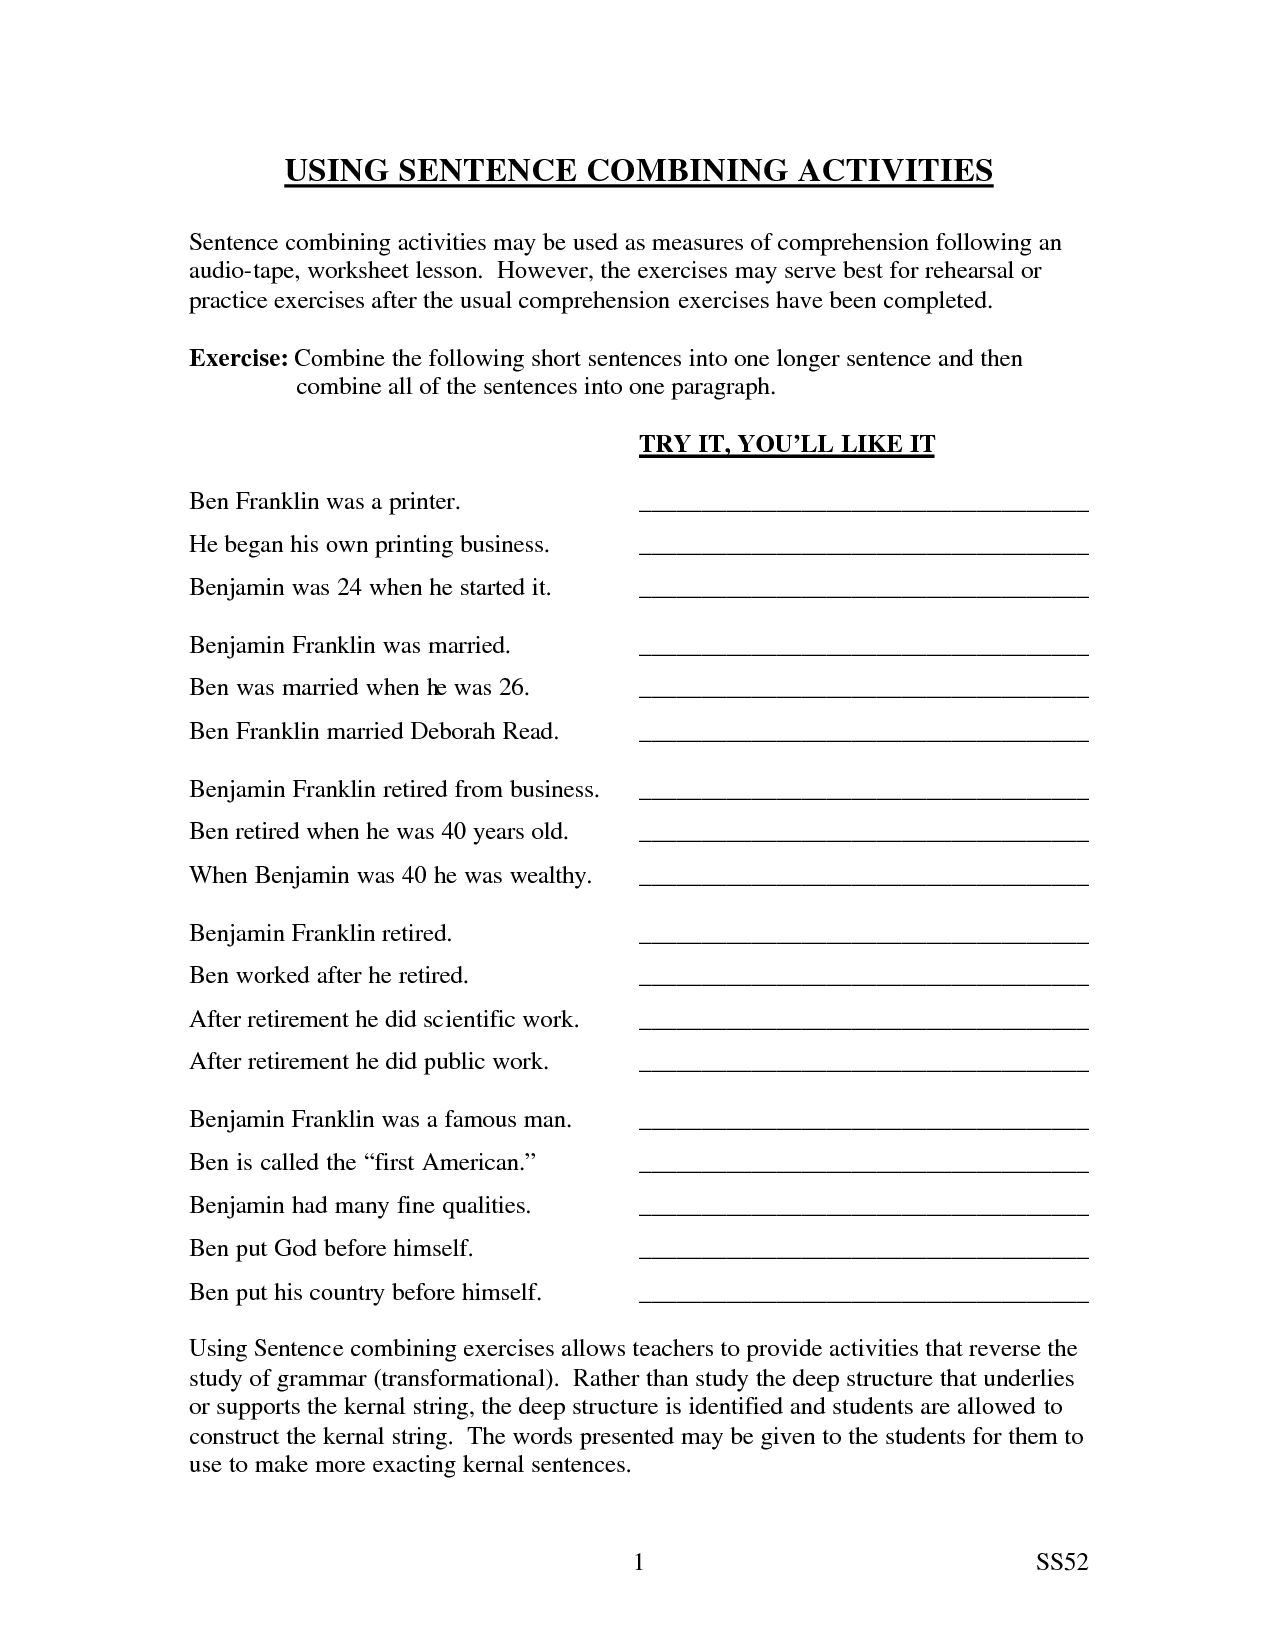 sentence-fragment-worksheets-worksheets-kristawiltbank-free-printable-worksheets-and-activities